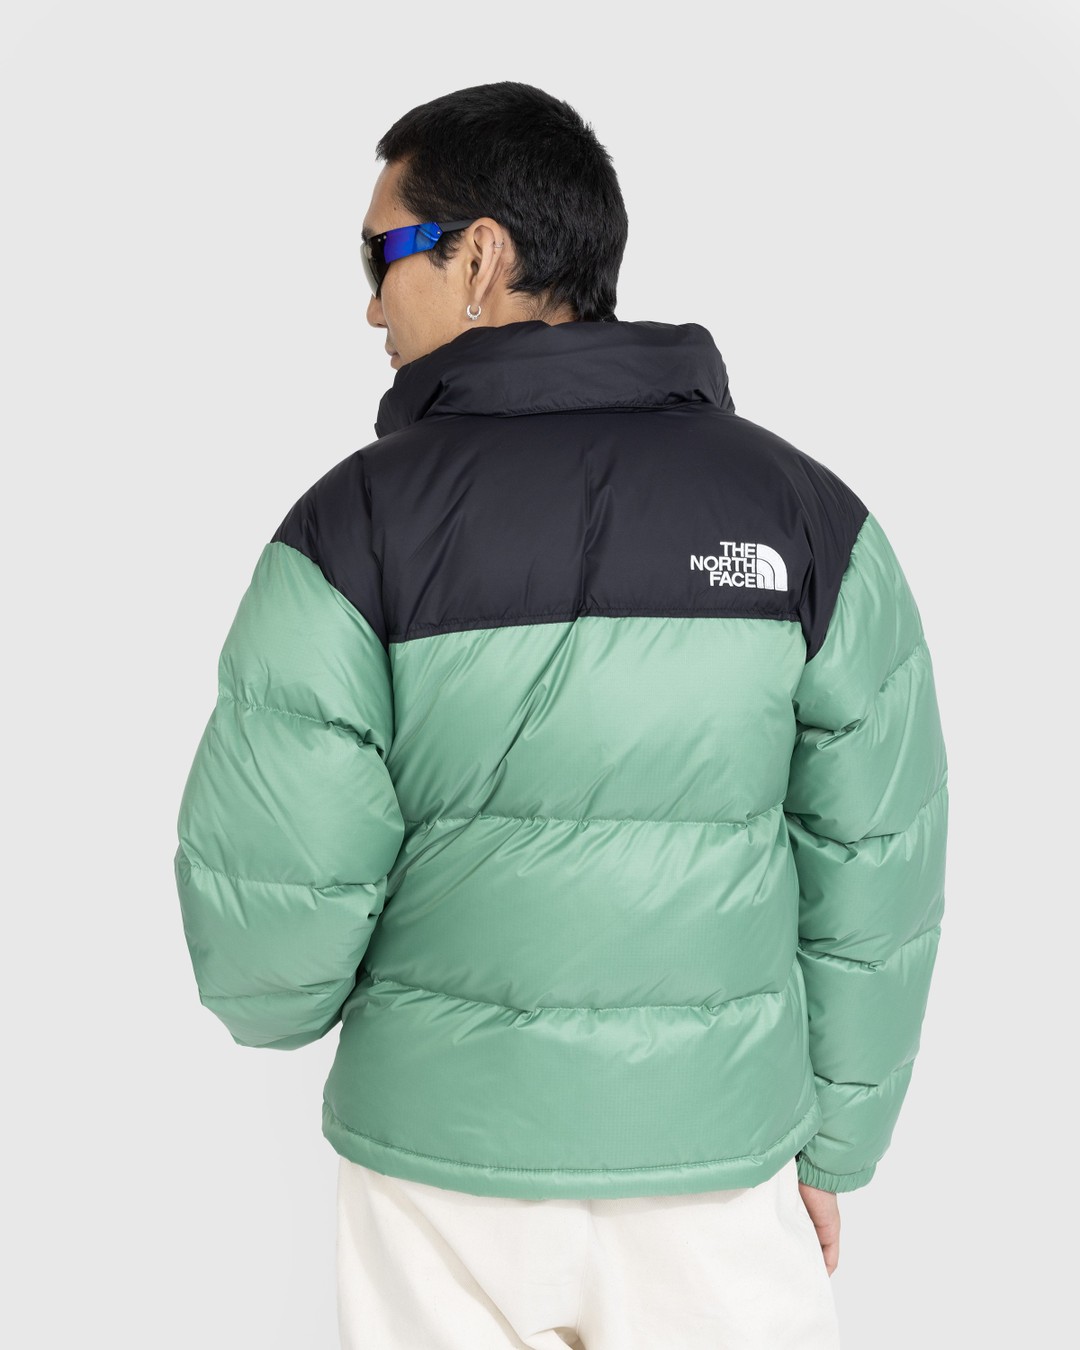 The North Face – 1996 Retro Nuptse Jacket Deep Grass Green - Outerwear - Green - Image 3